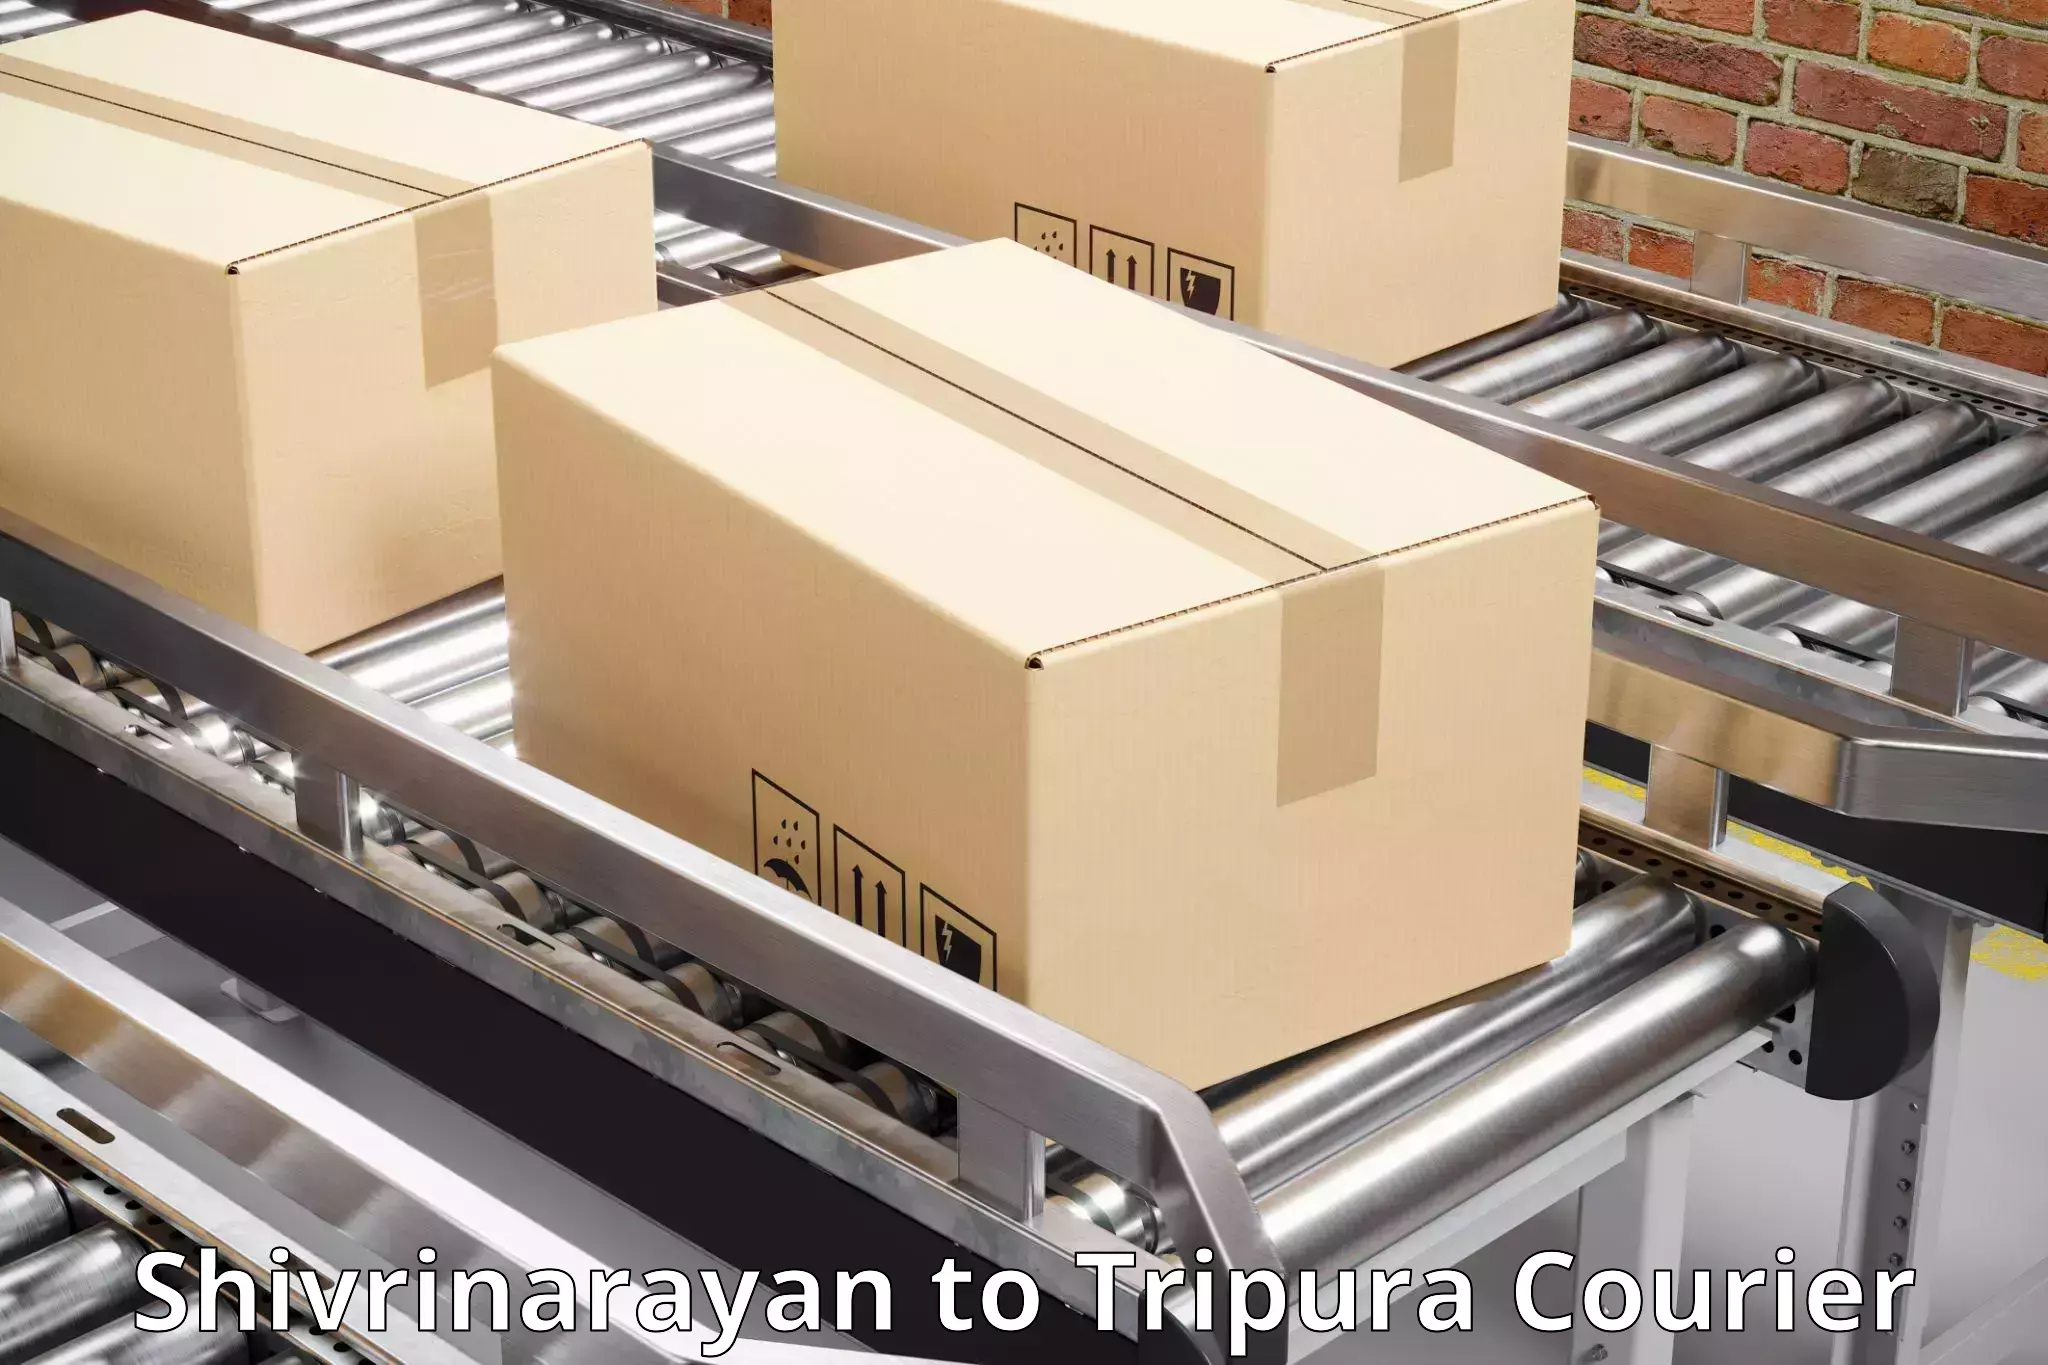 Door-to-door freight service Shivrinarayan to South Tripura